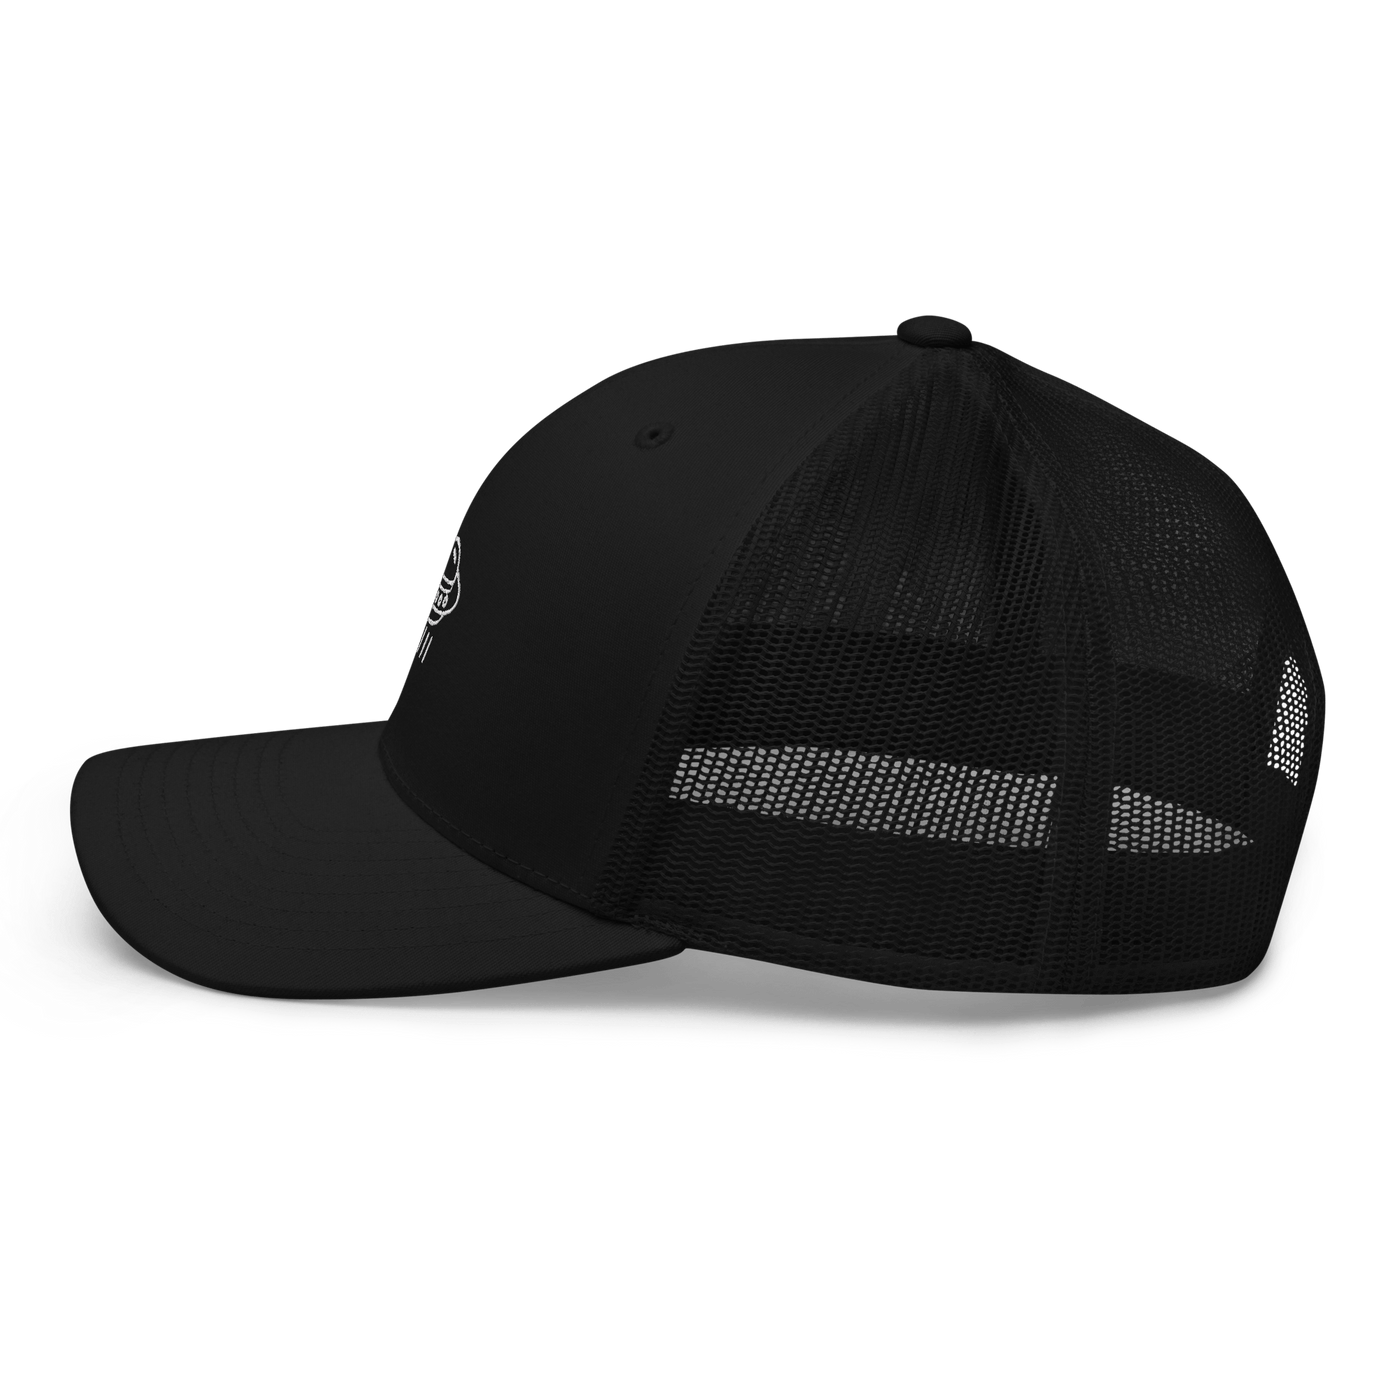 UFO Trucker Cap - Black - - Just Another Cap Store